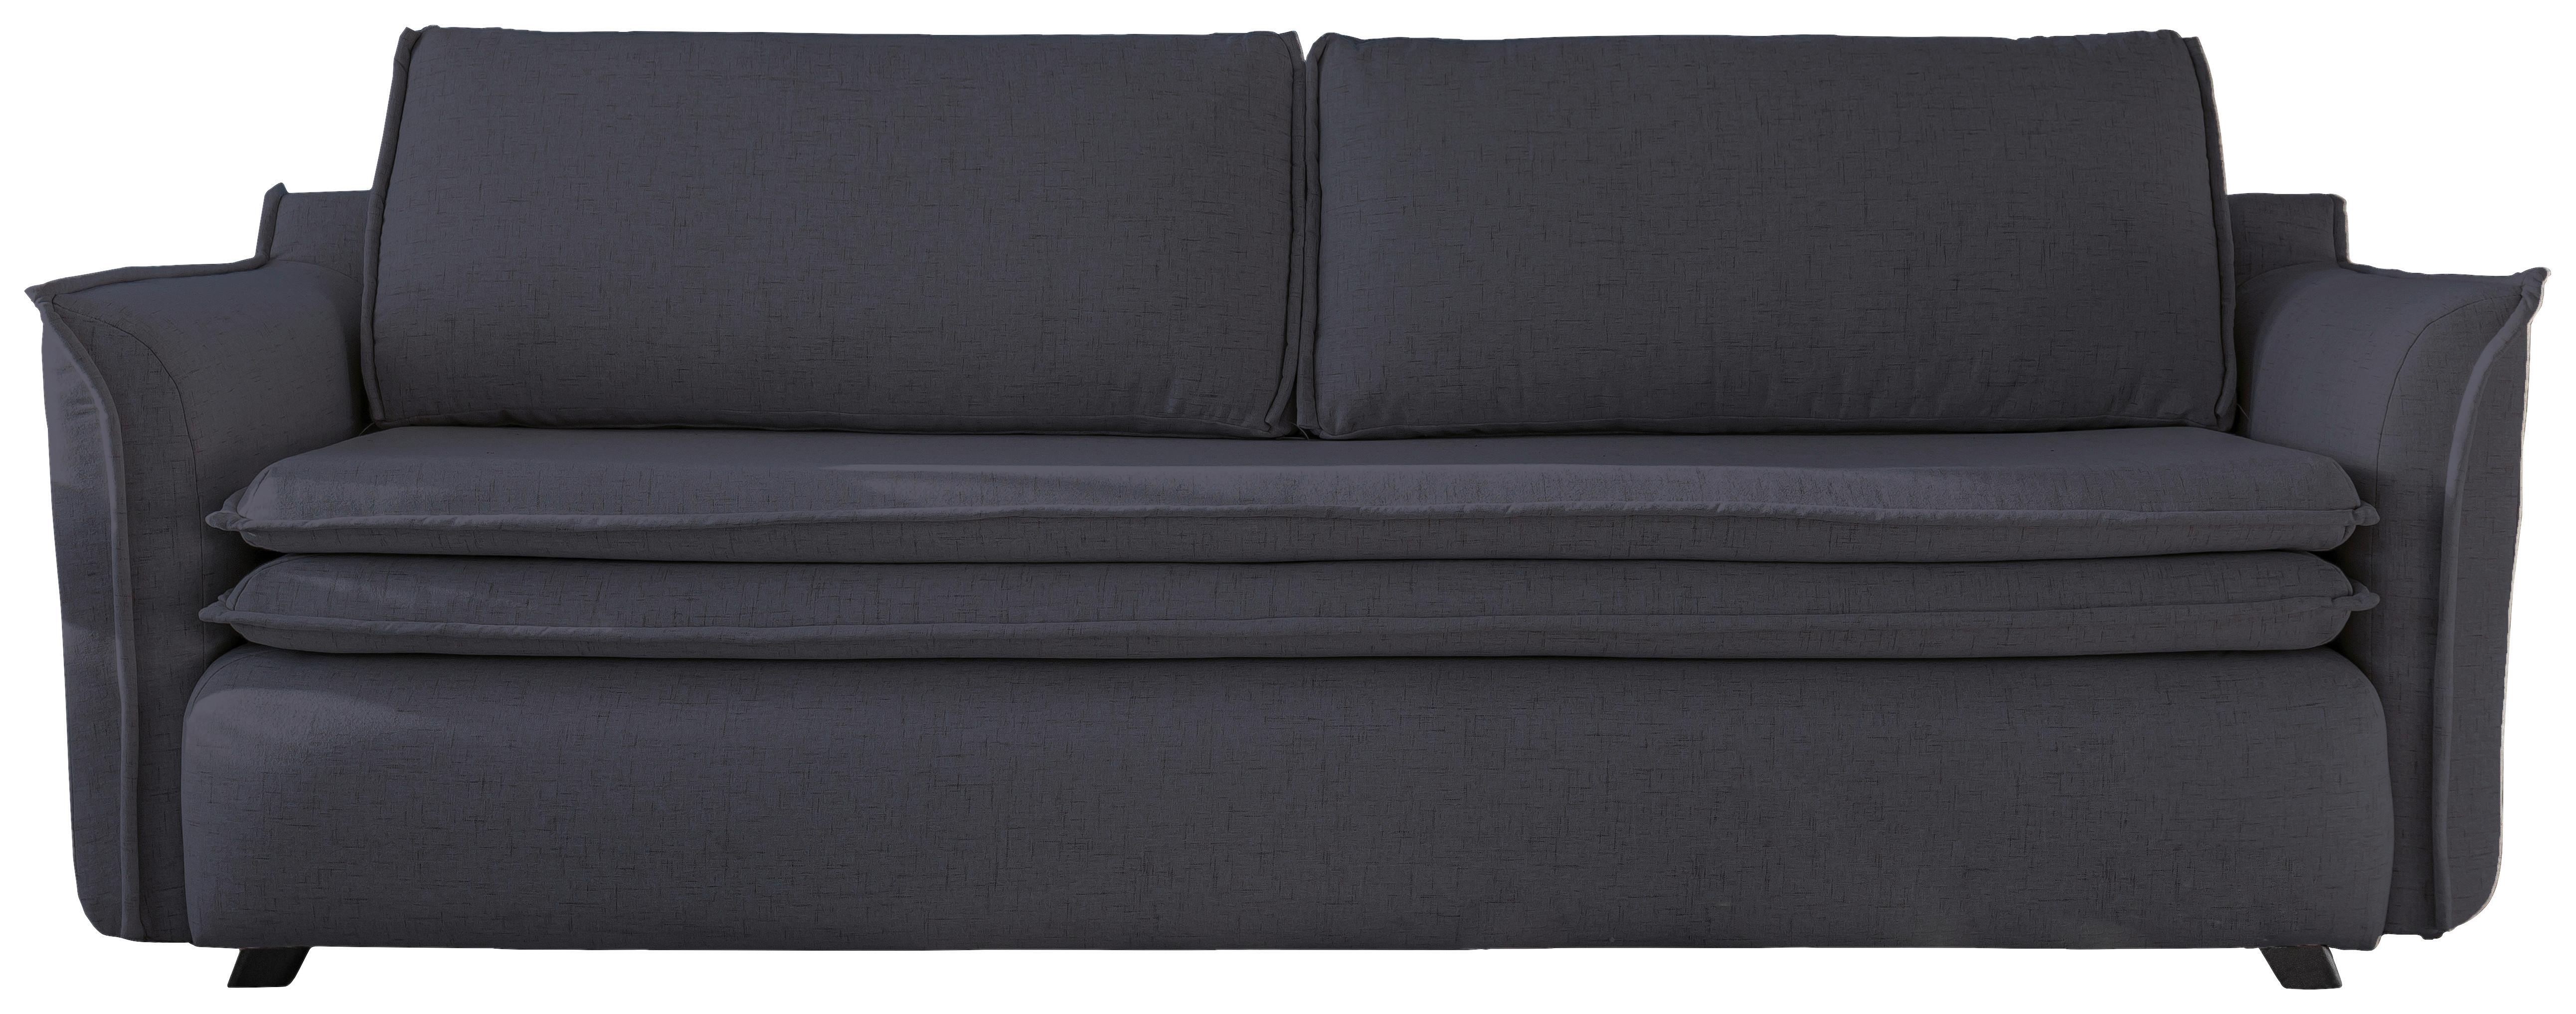 Dreisitzer-Sofa mit Bettfunkt. Charming Charlie, Webstoff - Anthrazit/Schwarz, Basics, Textil (225/85/90cm) - MID.YOU